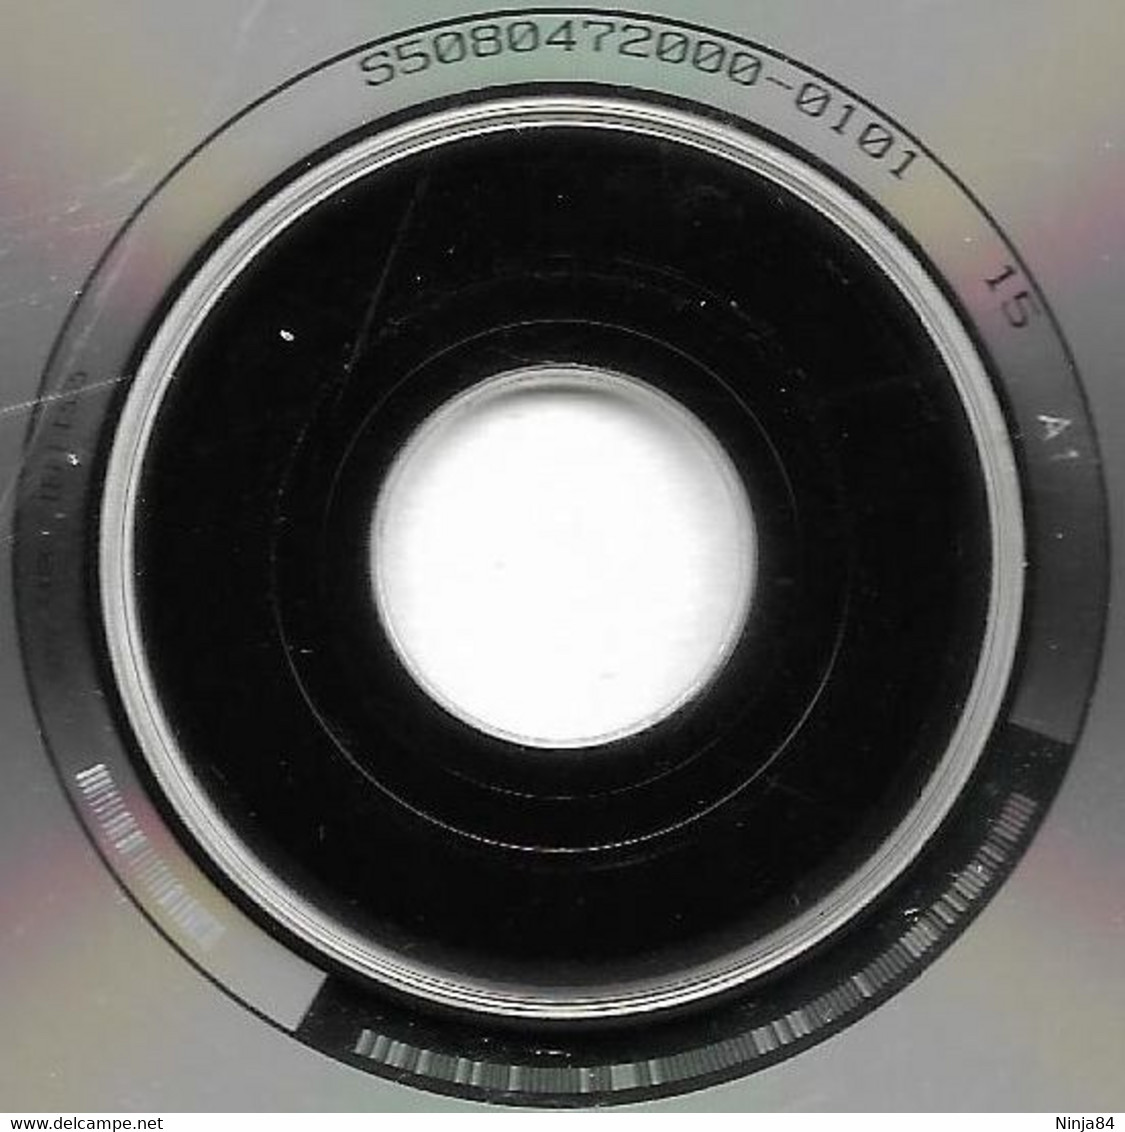 CD  Peter Tosh / Bob Marley "  Super Hits  "  Autriche - Reggae